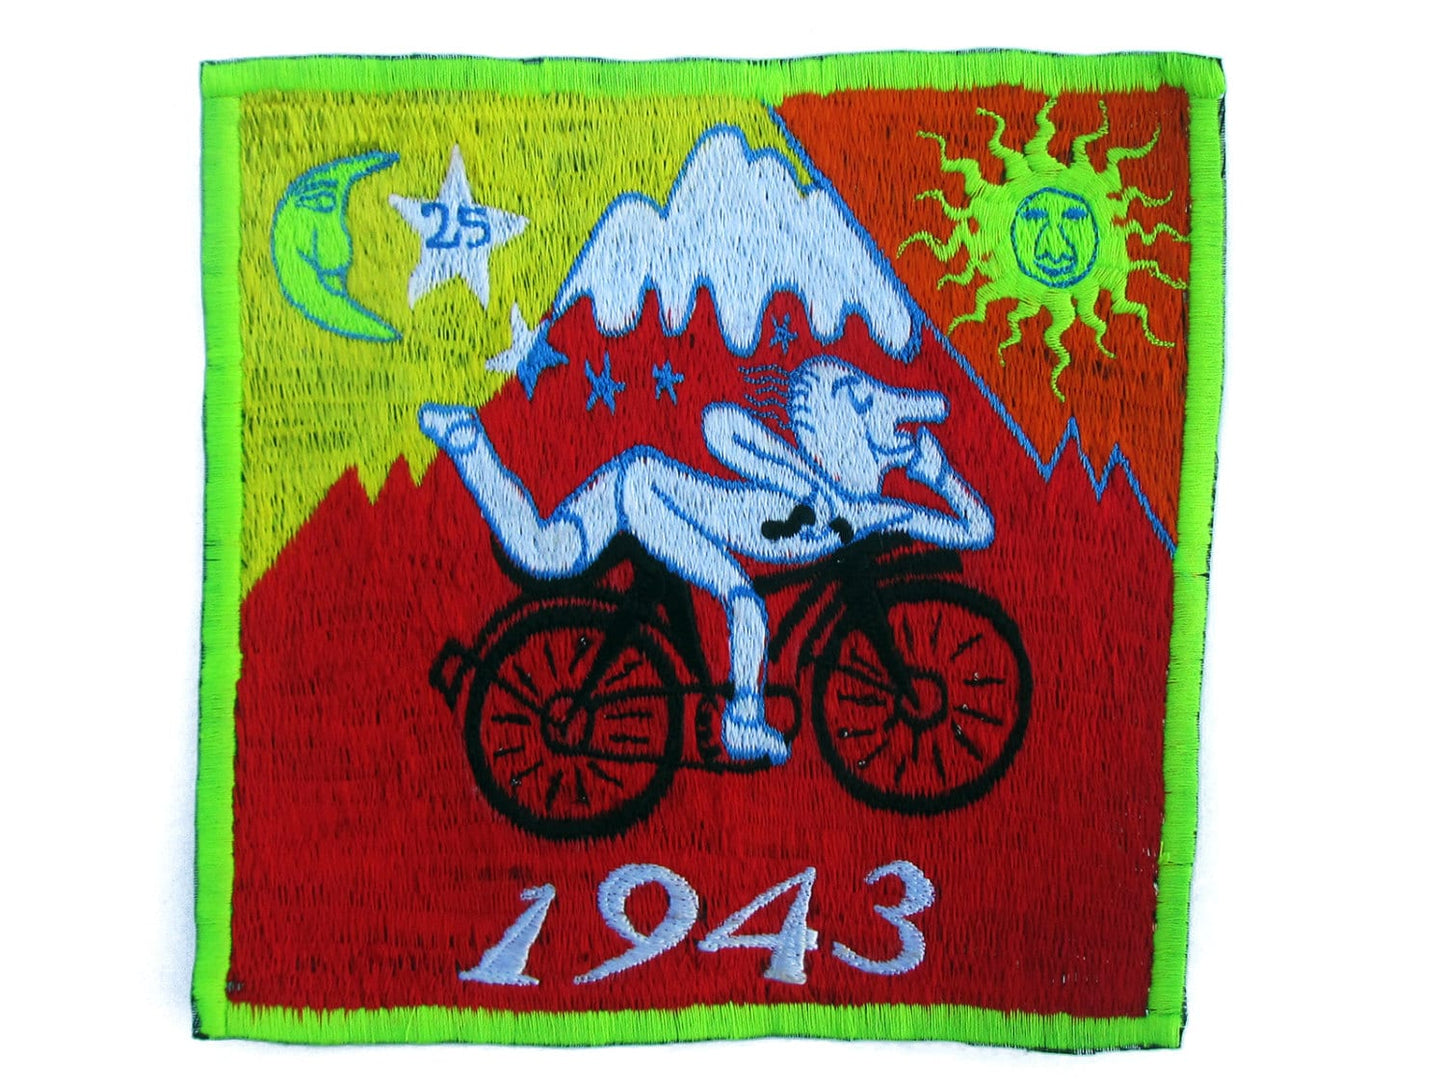 Red Bicycle Day Albert Hofmann 1943 LSD Cult medium Patch Burning Man Psychedelic Acid Trip Hippie Drug Visionary Divine Healing Medicine